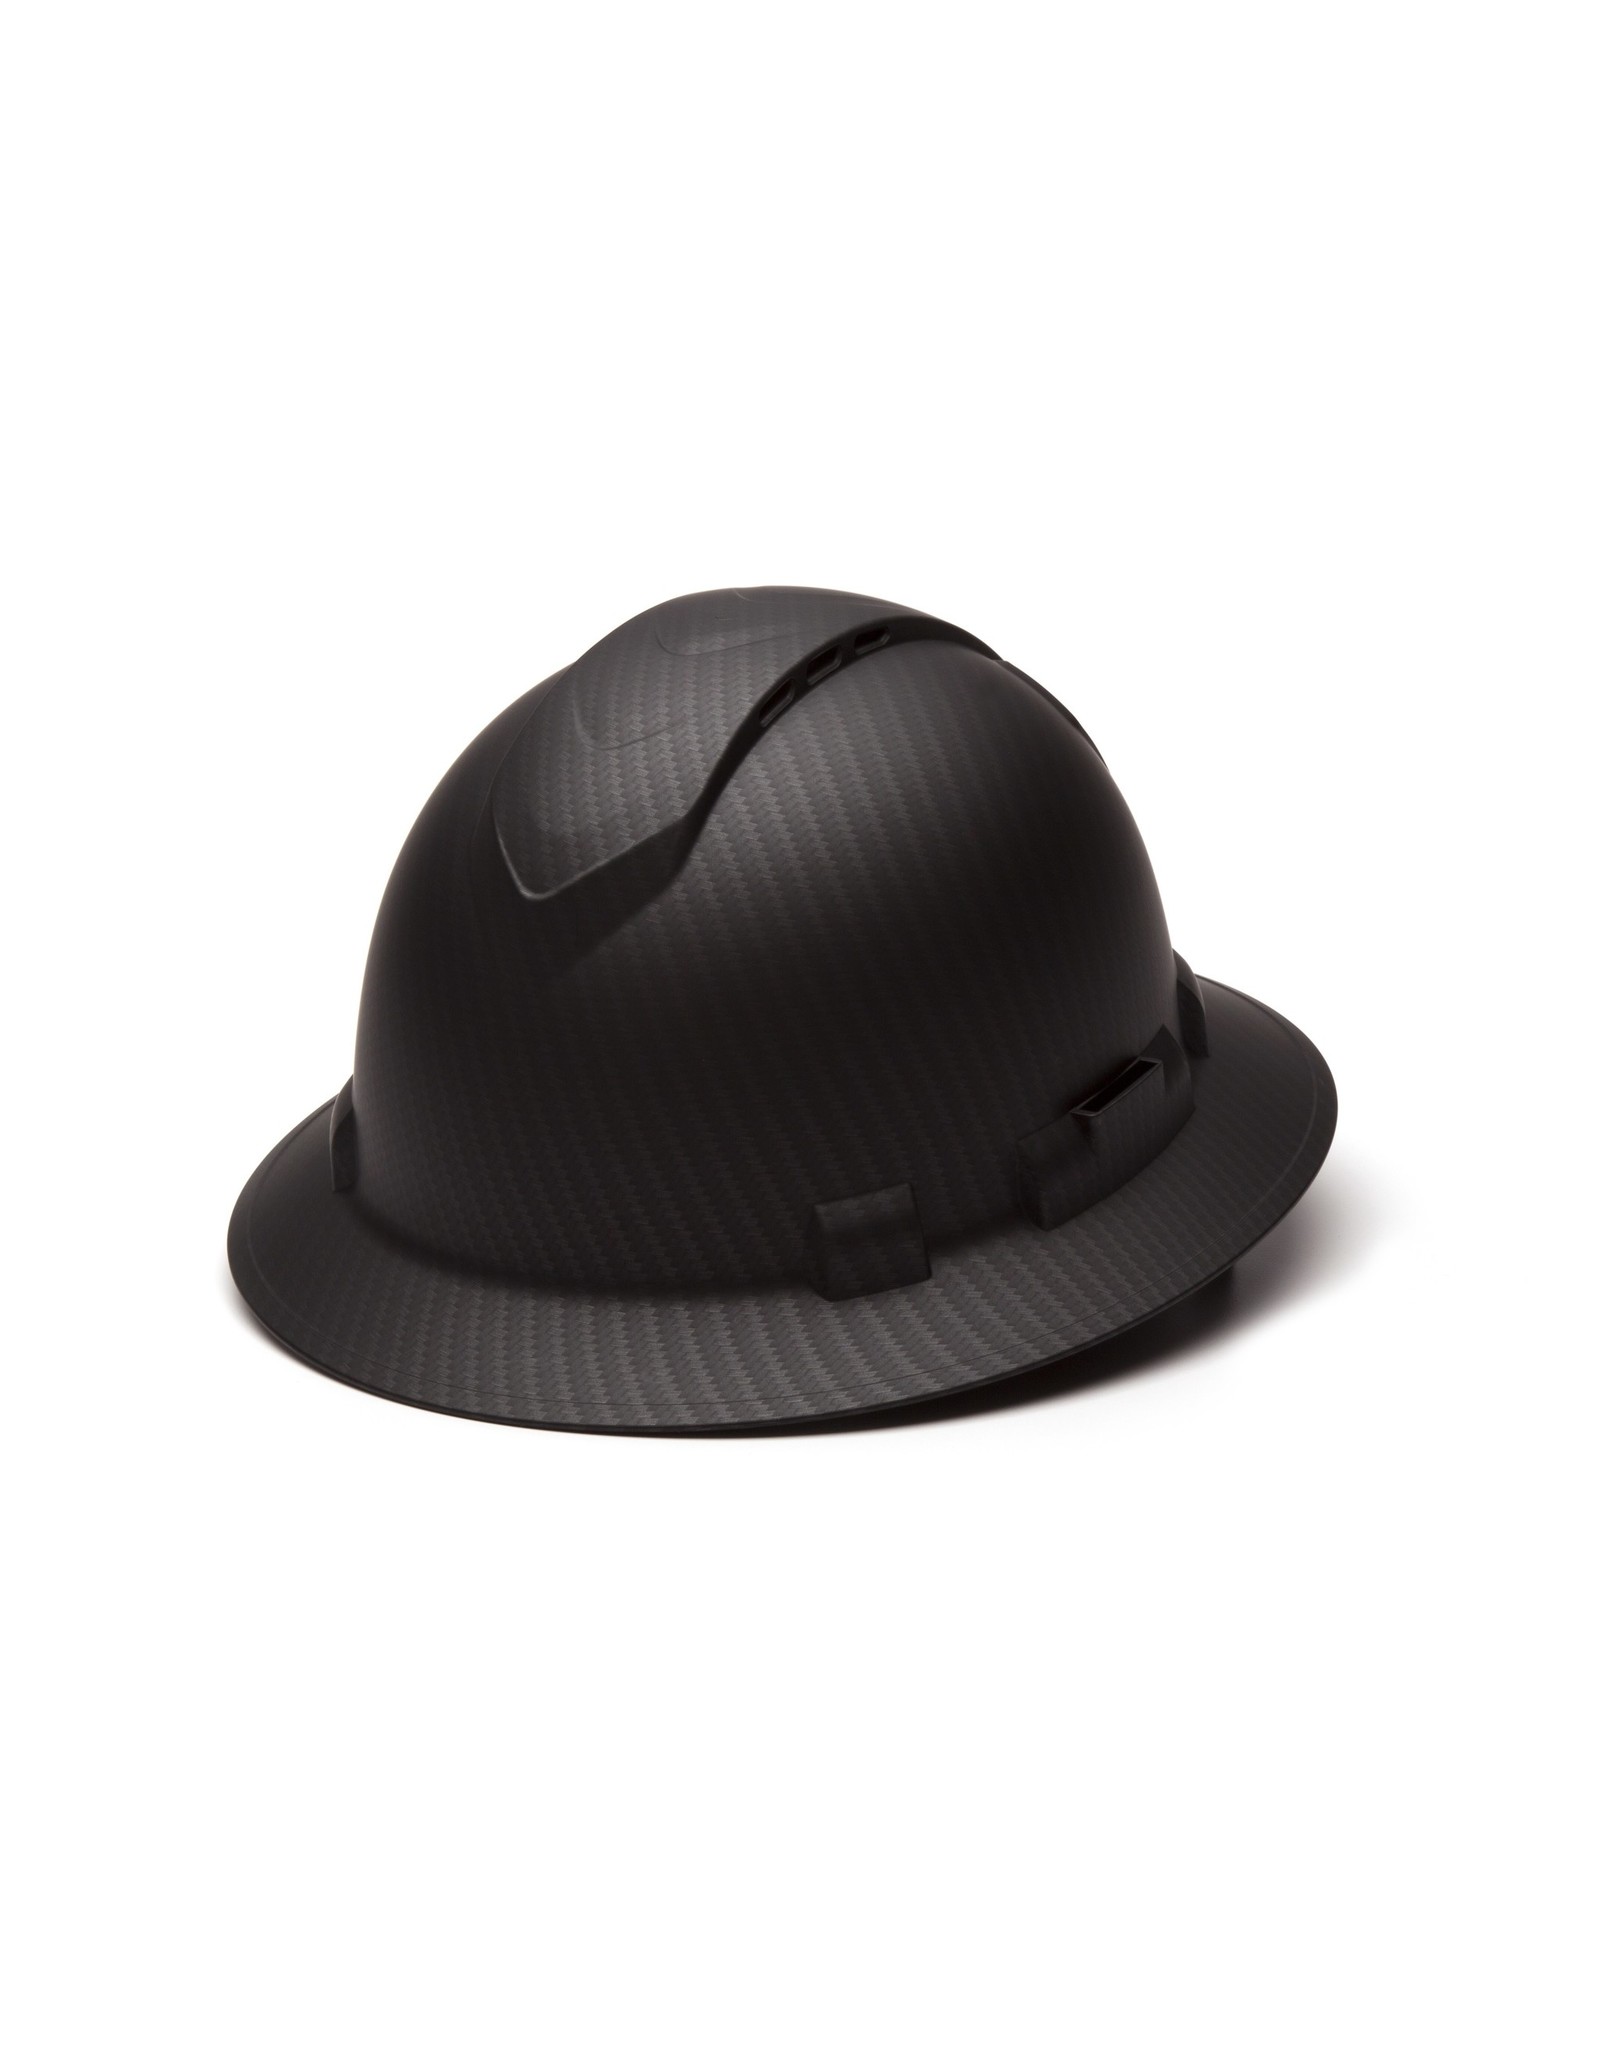 Pyramex Ridgeline Full Brim Hard Hat Carbon Fiber